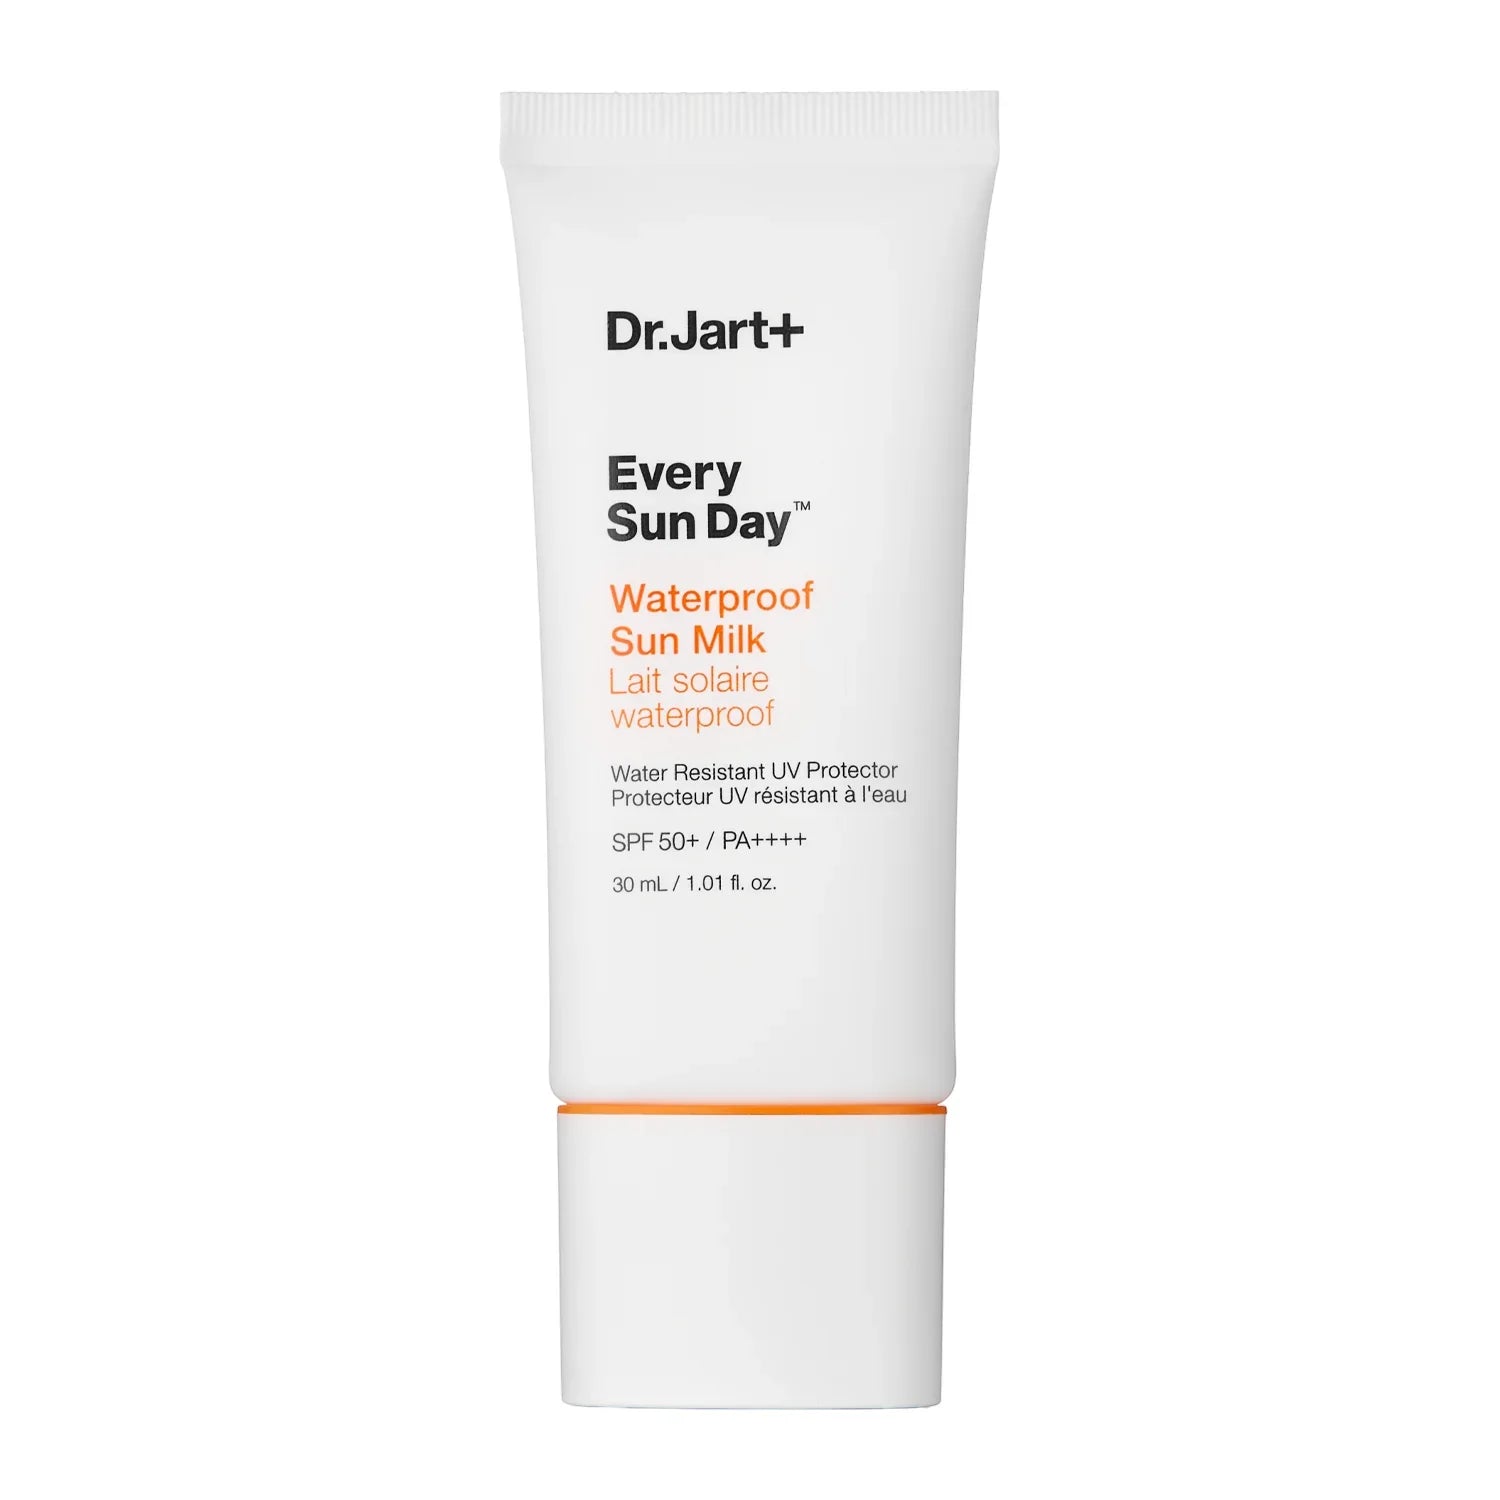 Dr. Jart+ - Every Sun Day Waterproof Sun Milk SPF50+/PA++++ - Waterproof Sunscreen Milk - 30ml